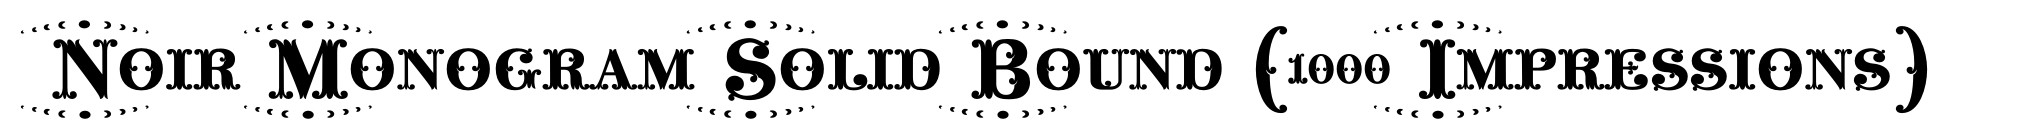 Noir Monogram Solid Bound (1000 Impressions) image